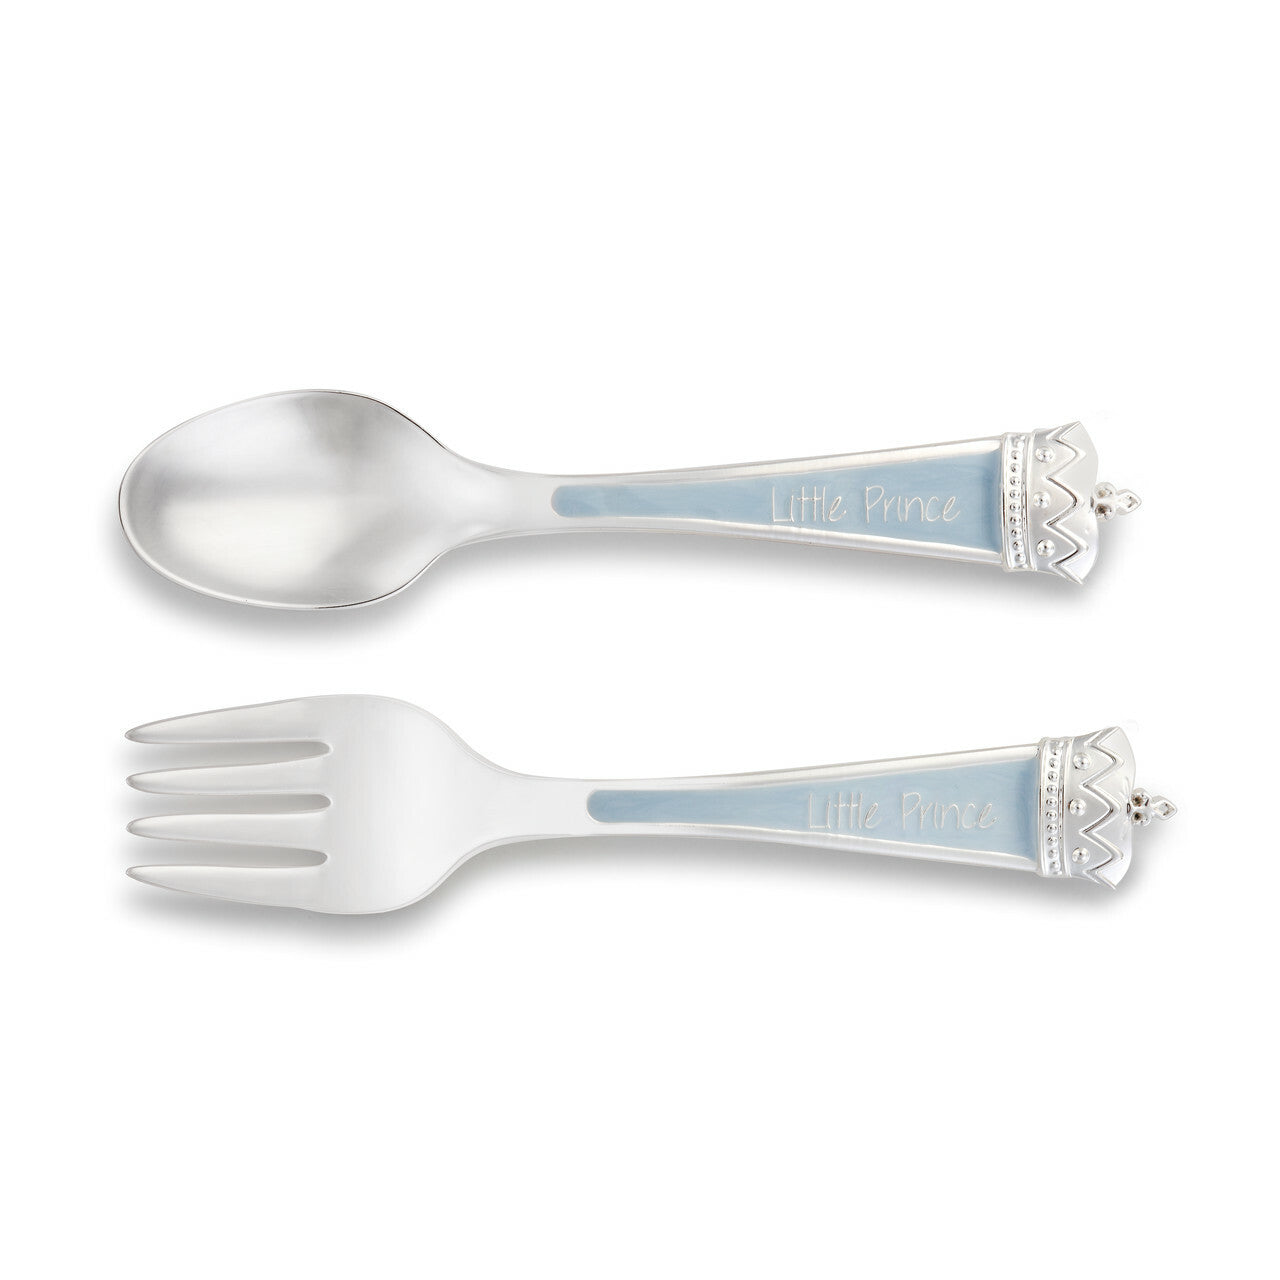 Prince Spoon & Fork Keepsake Gift Set